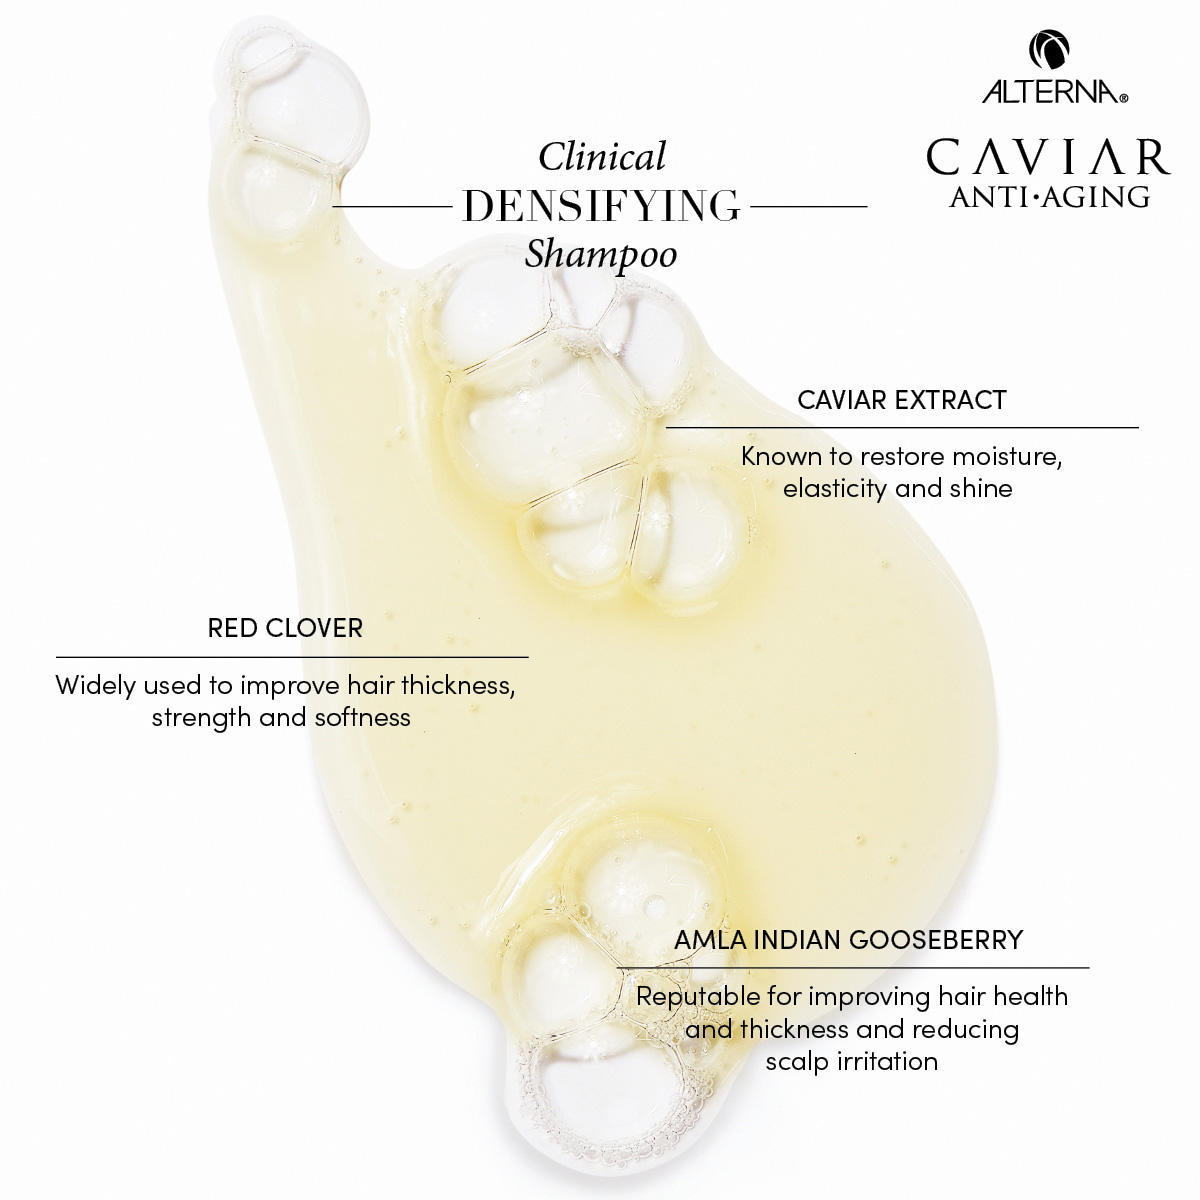 Alterna Caviar Anti-Aging Clinical Densifying Shampoo 250 ml - 4